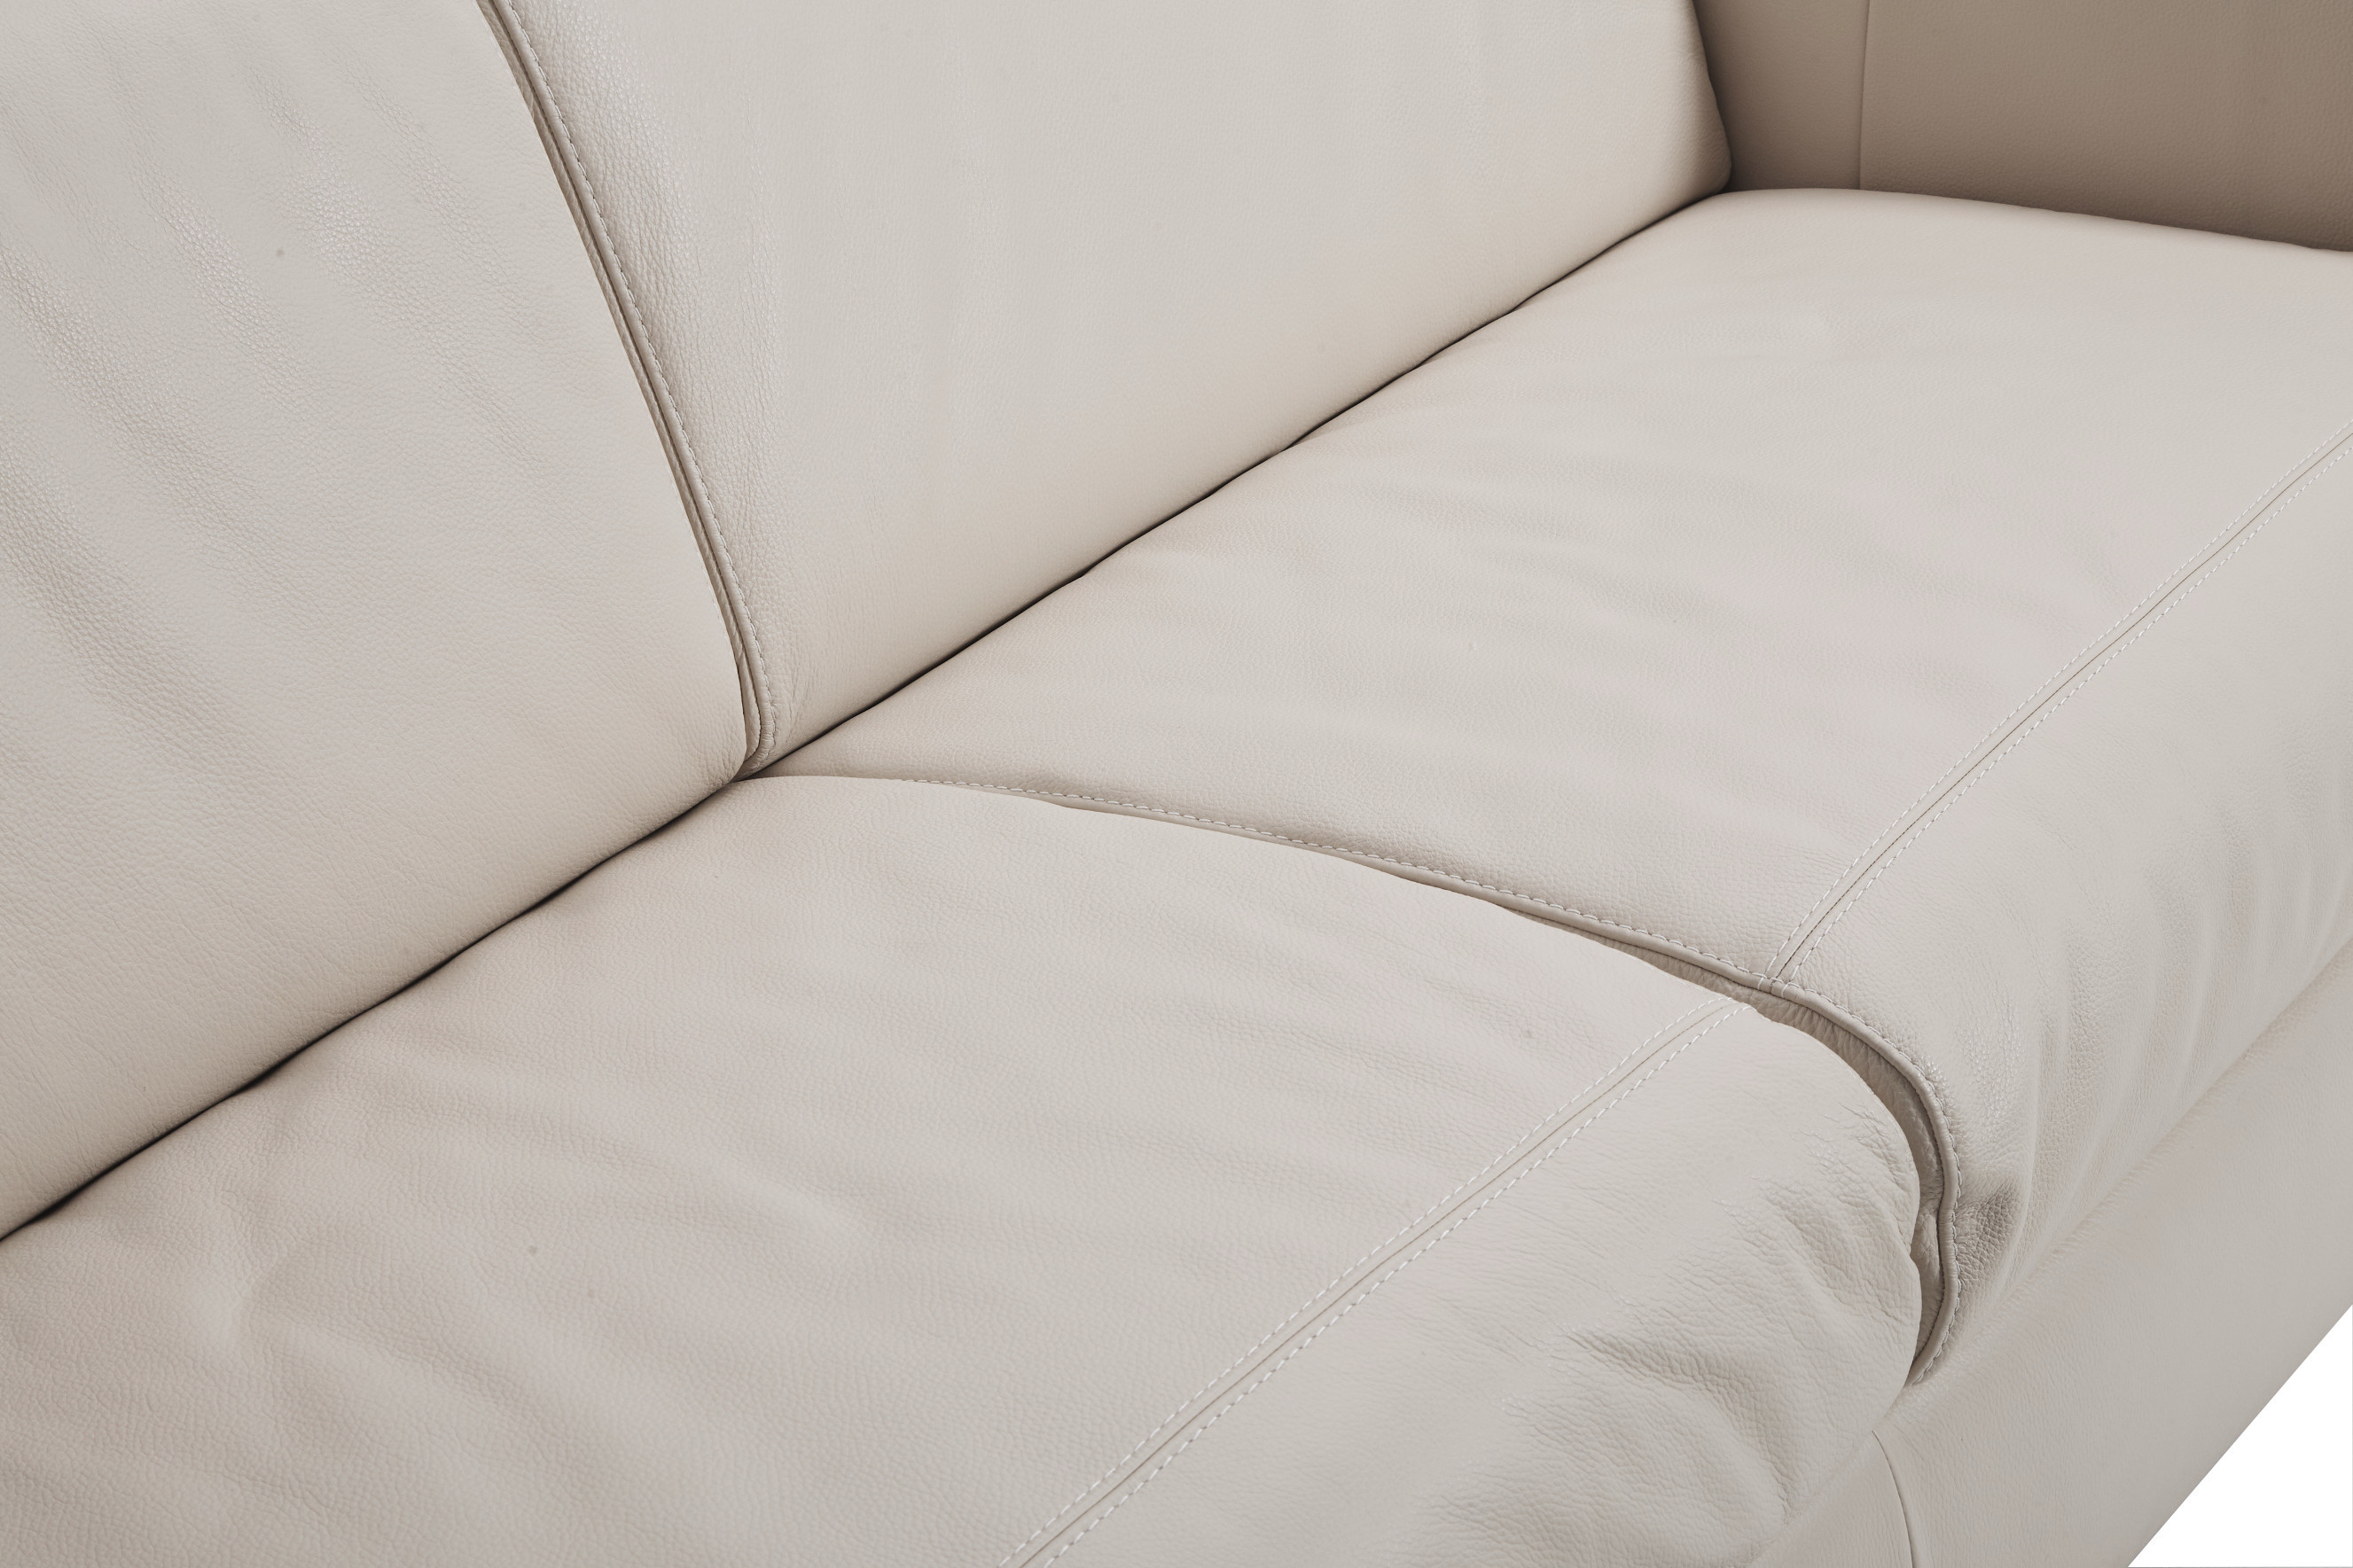 Visconti Leather Sofa Bed - White